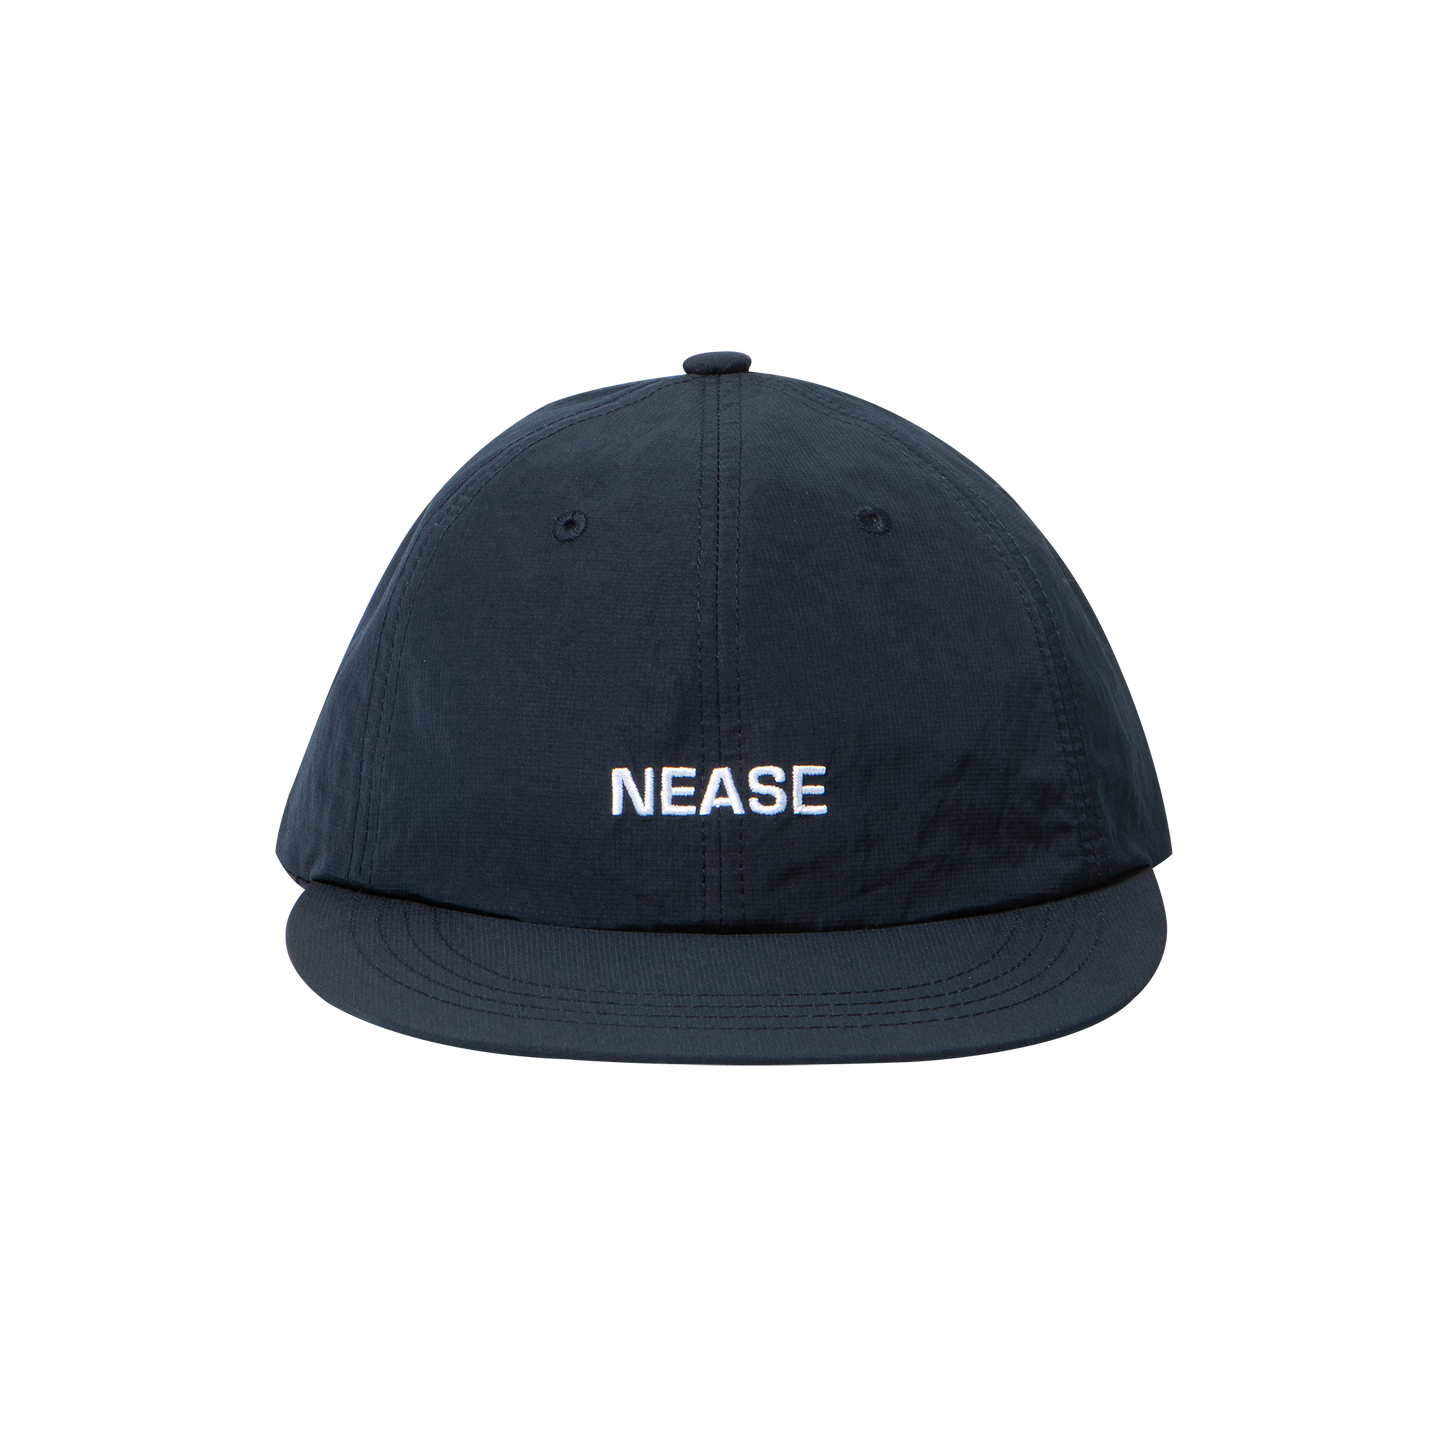 NEASE Nylon nease logo hat (navy)